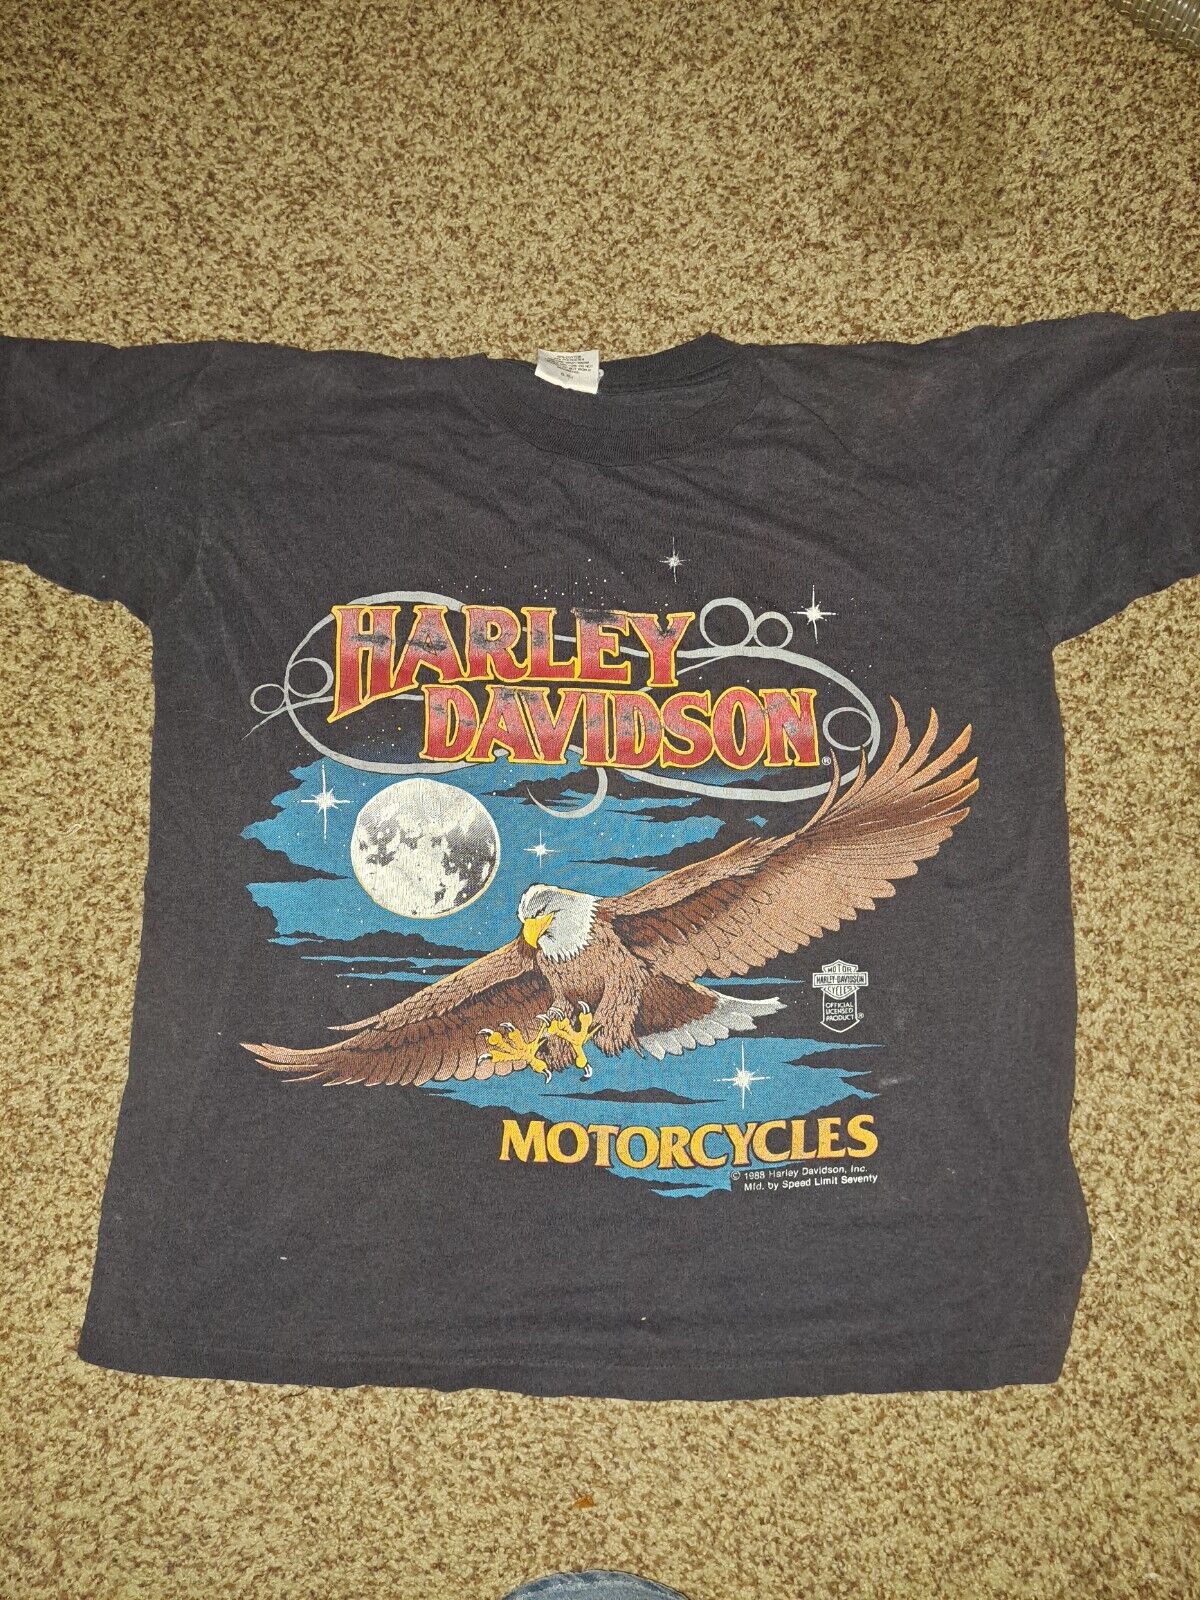 Vintage Early 80's Harley Davidson shirt